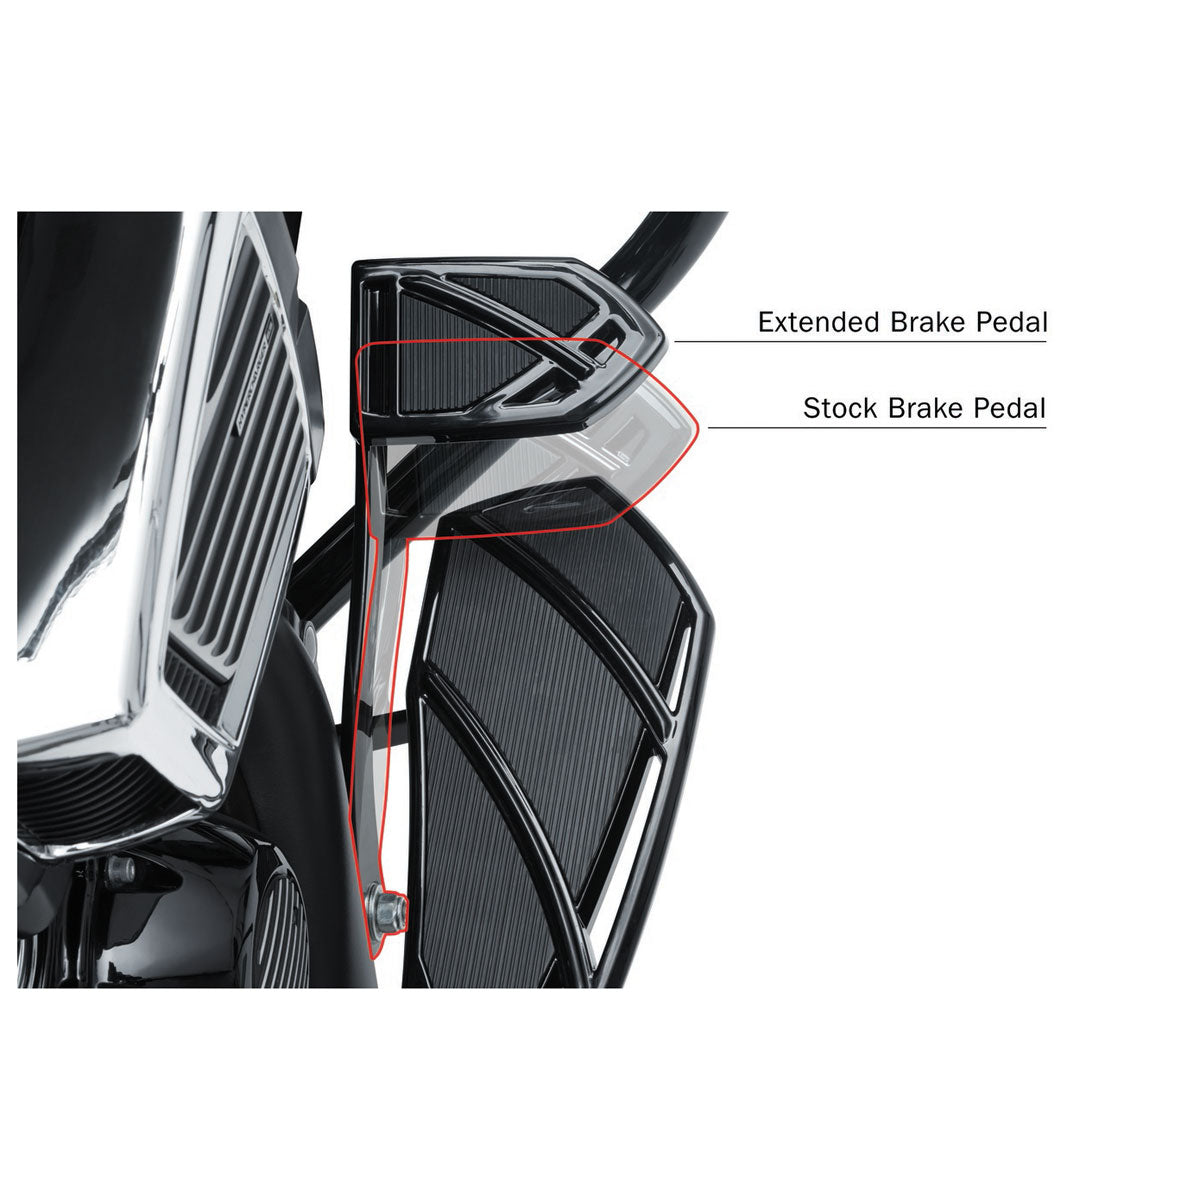 Harley-Davidson Extended Black Brake Pedal